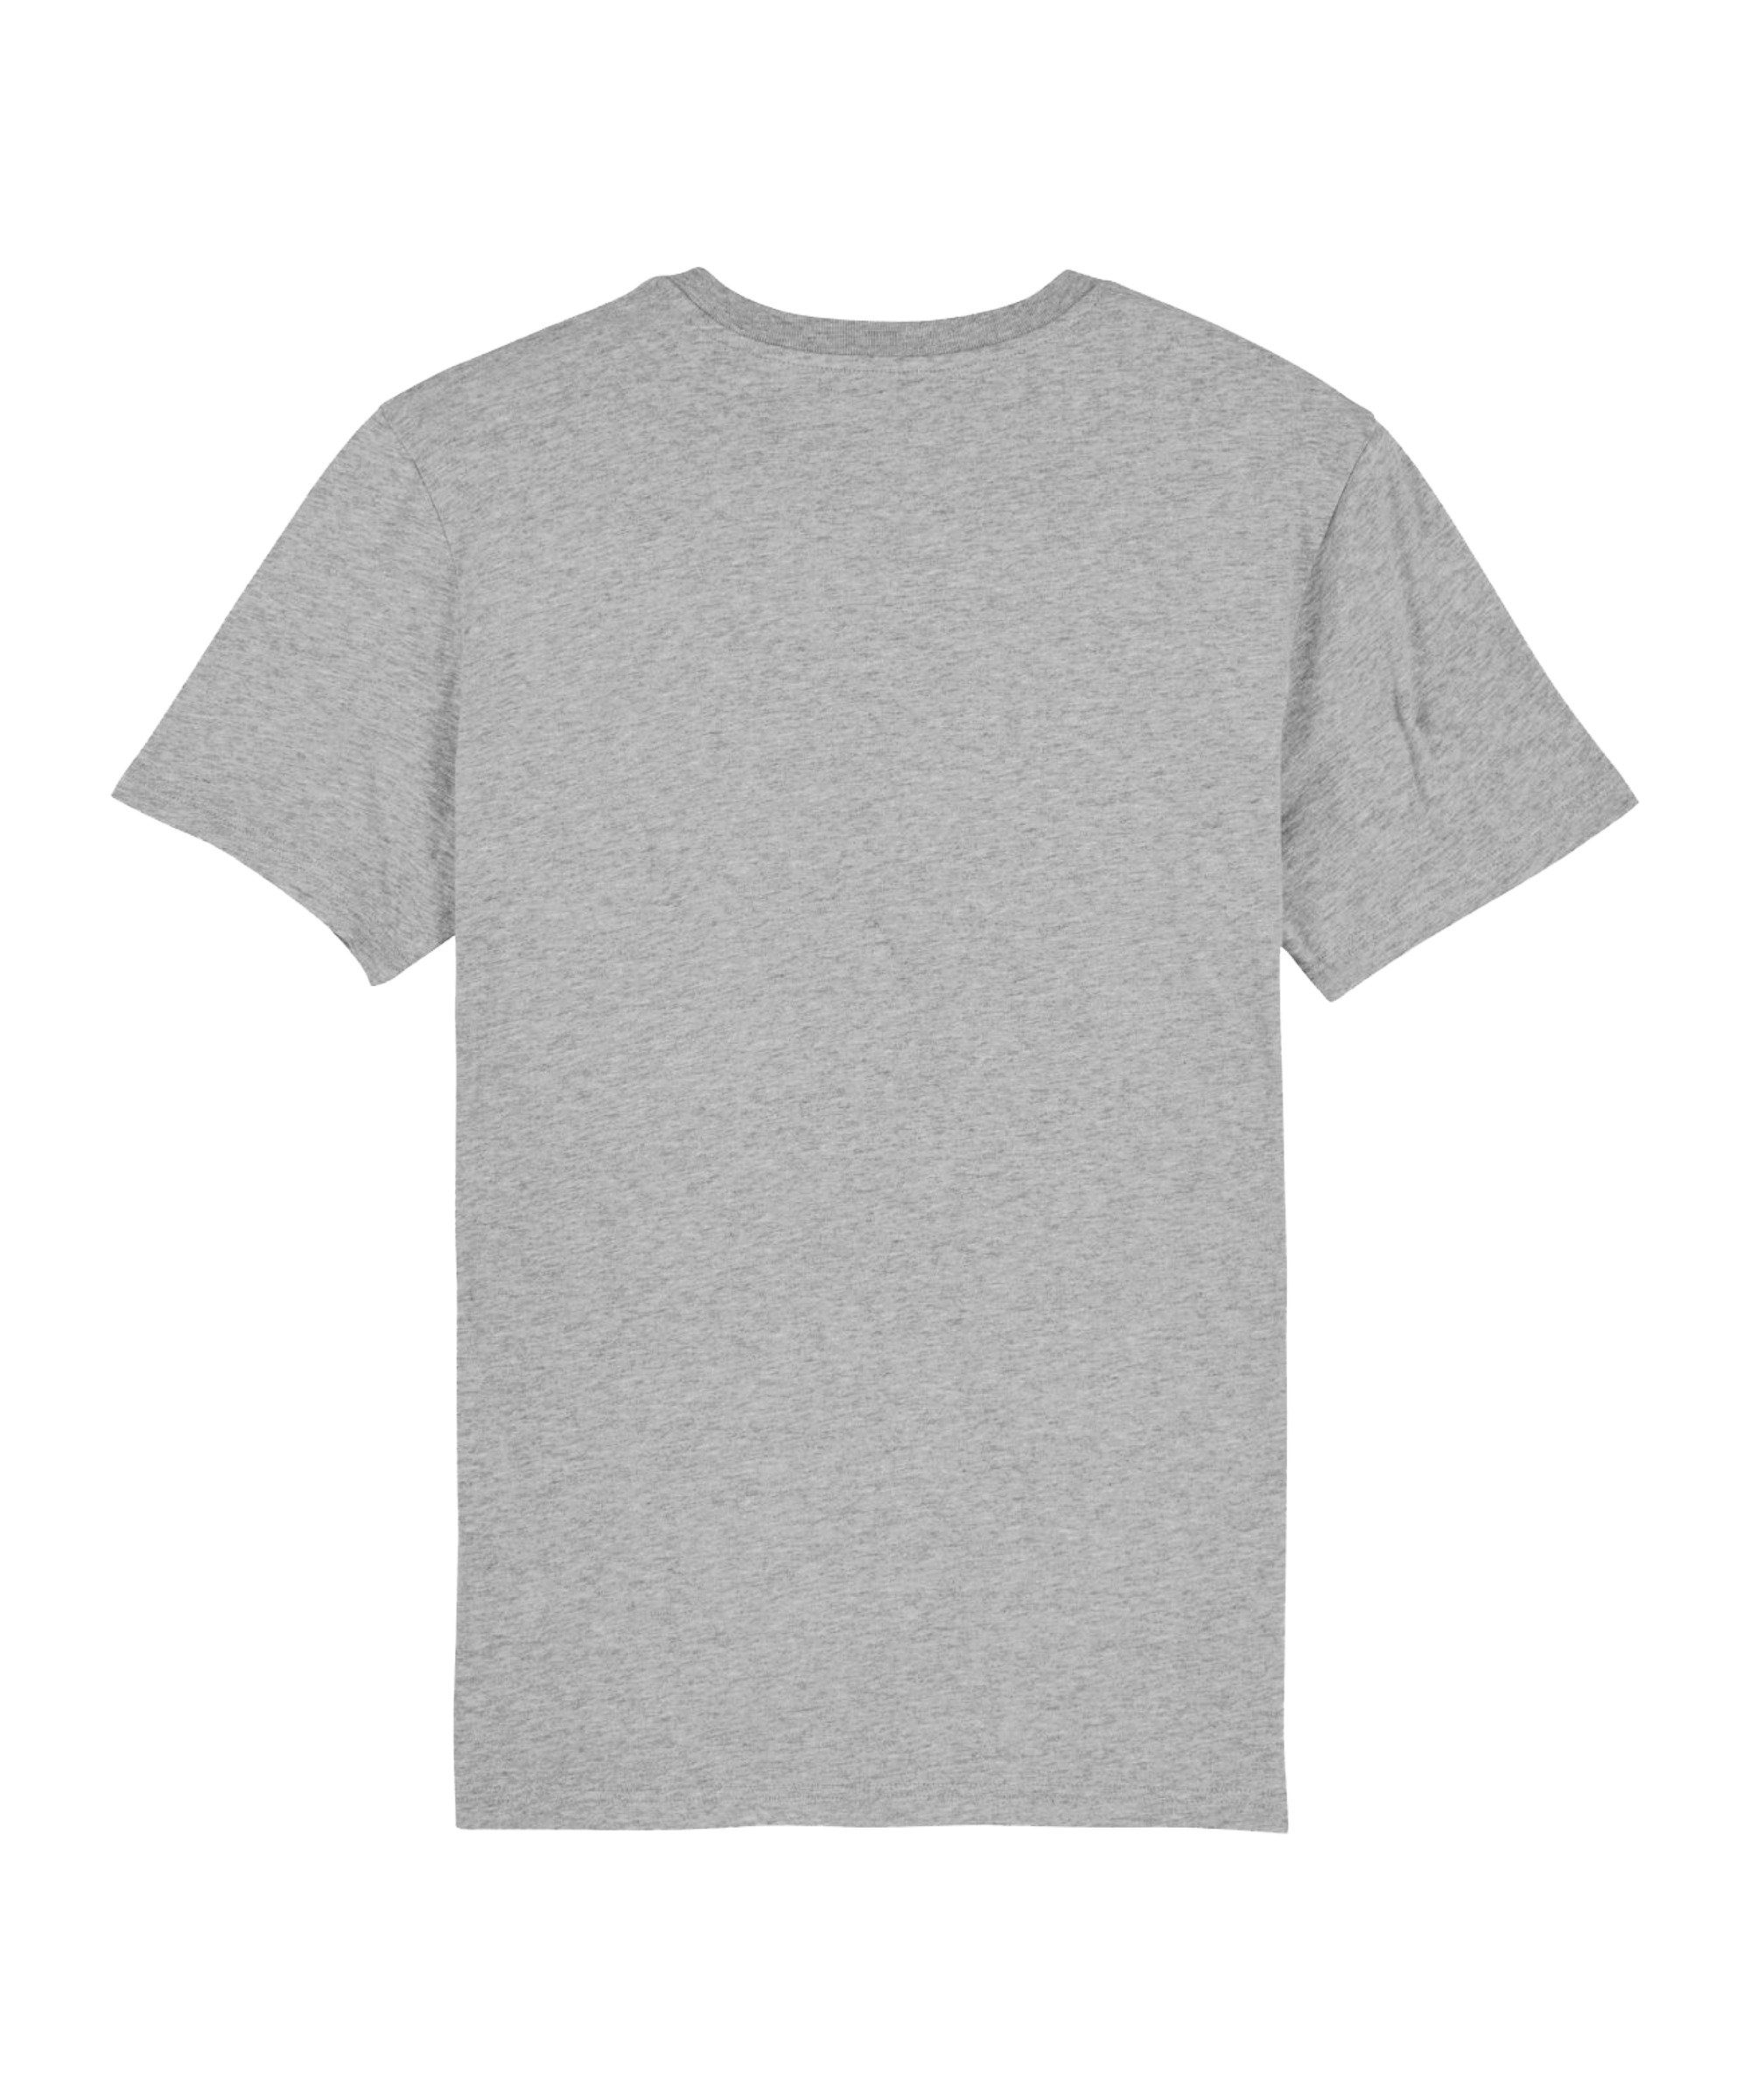 Bolzplatzkind T-Shirt Nachhaltiges T-Shirt "Friendly" Sand Produkt grau